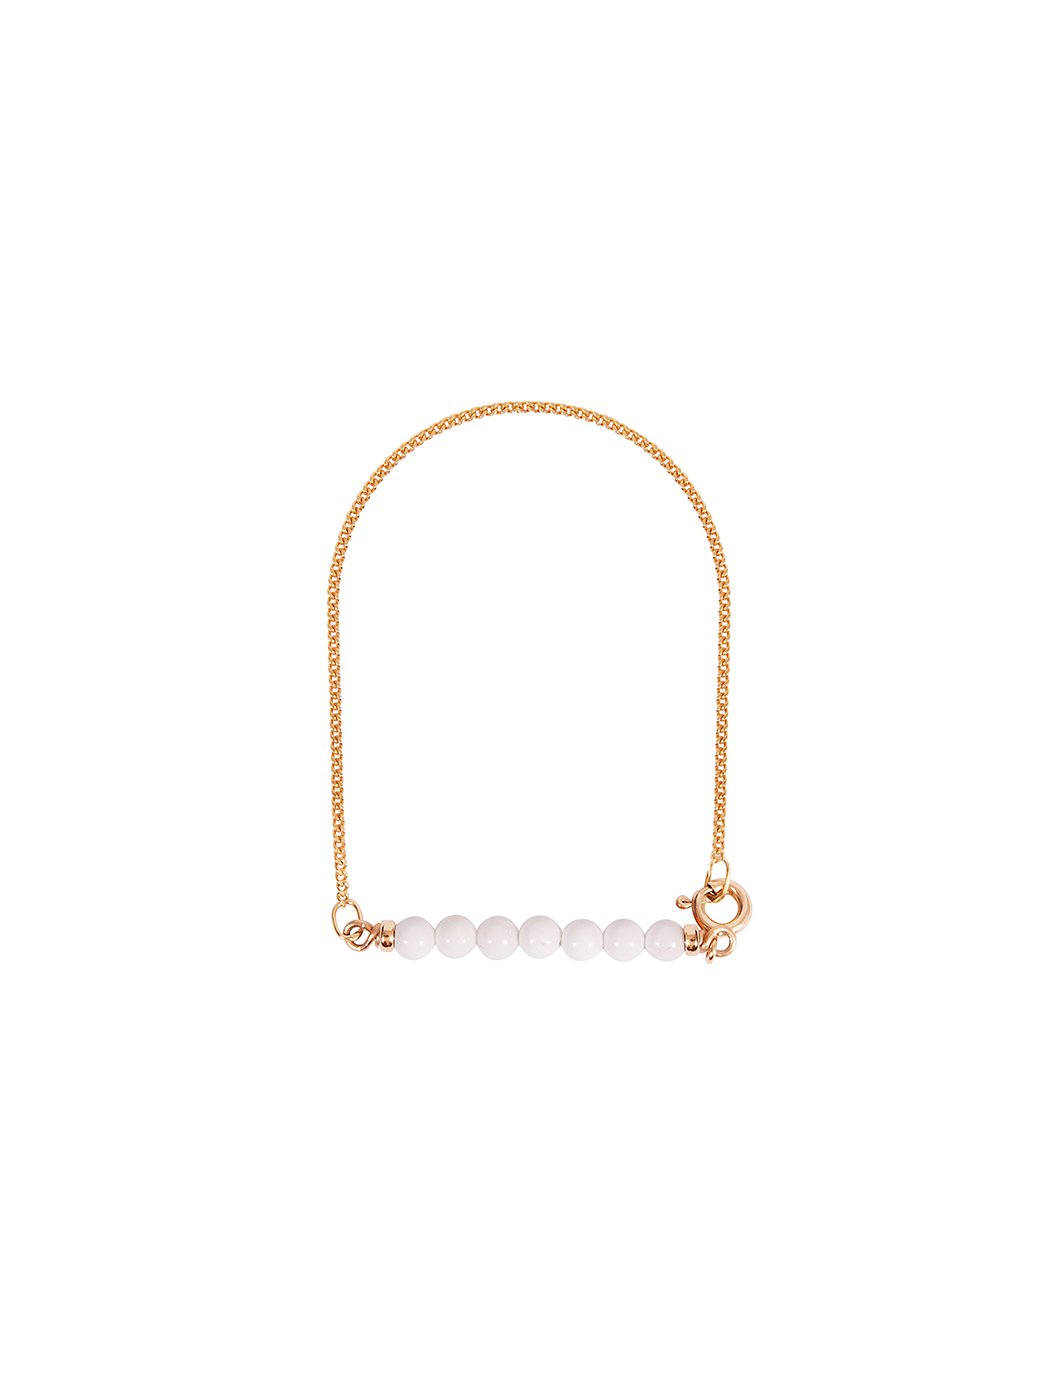 Fiorina Jewellery Gold Friendship Bracelet White Agate